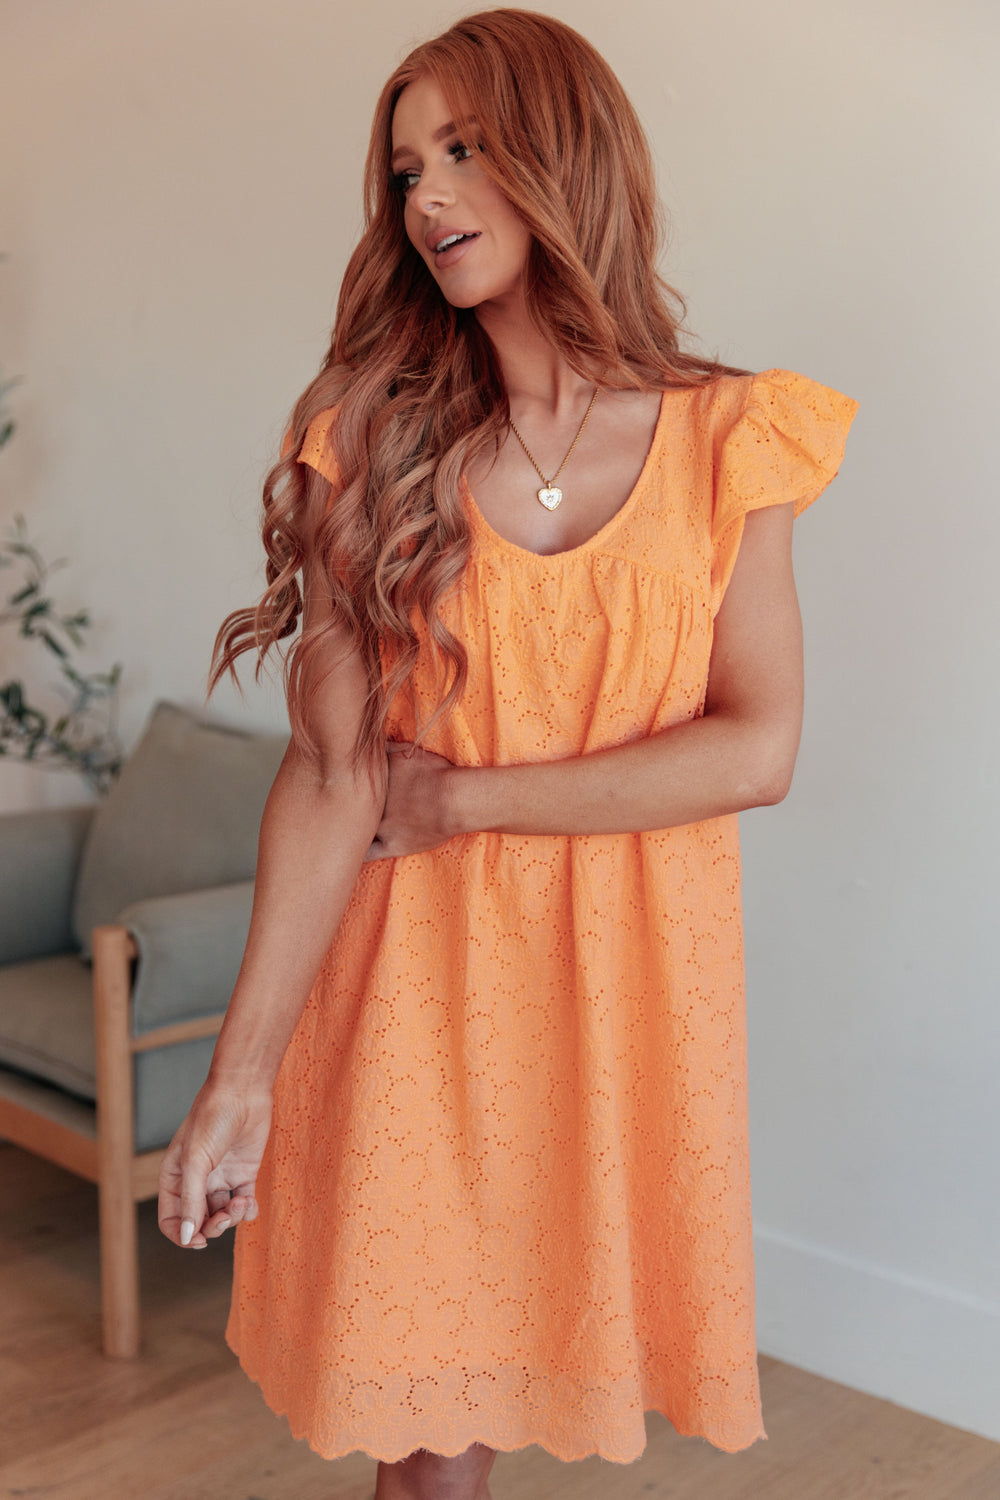 Stacy square Neckline dress – Krush Clothing Boutique